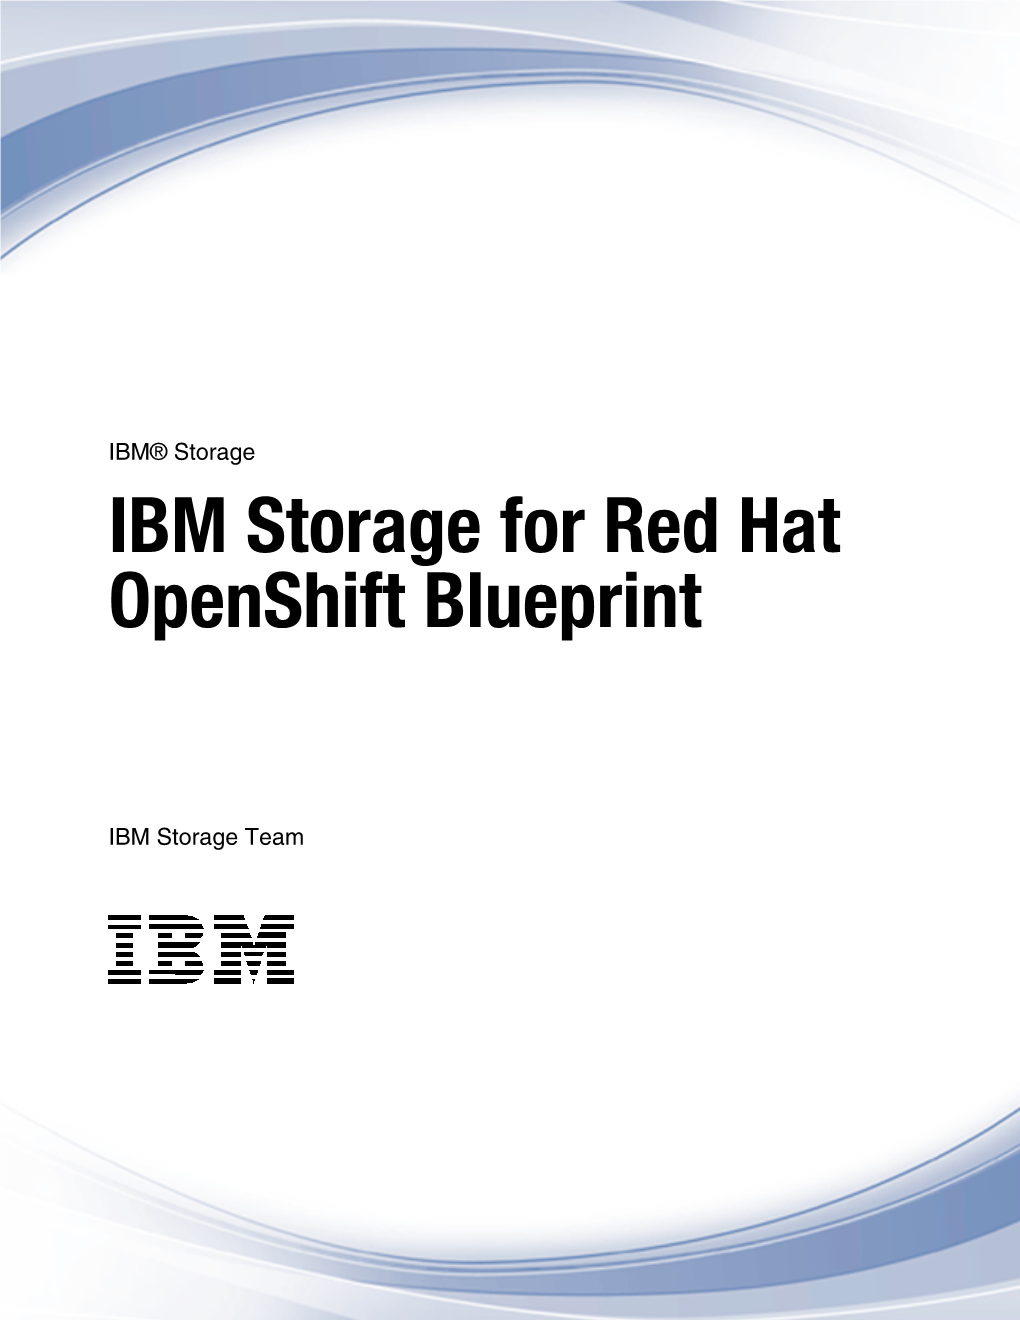 IBM Storage for Red Hat Openshift Blueprint